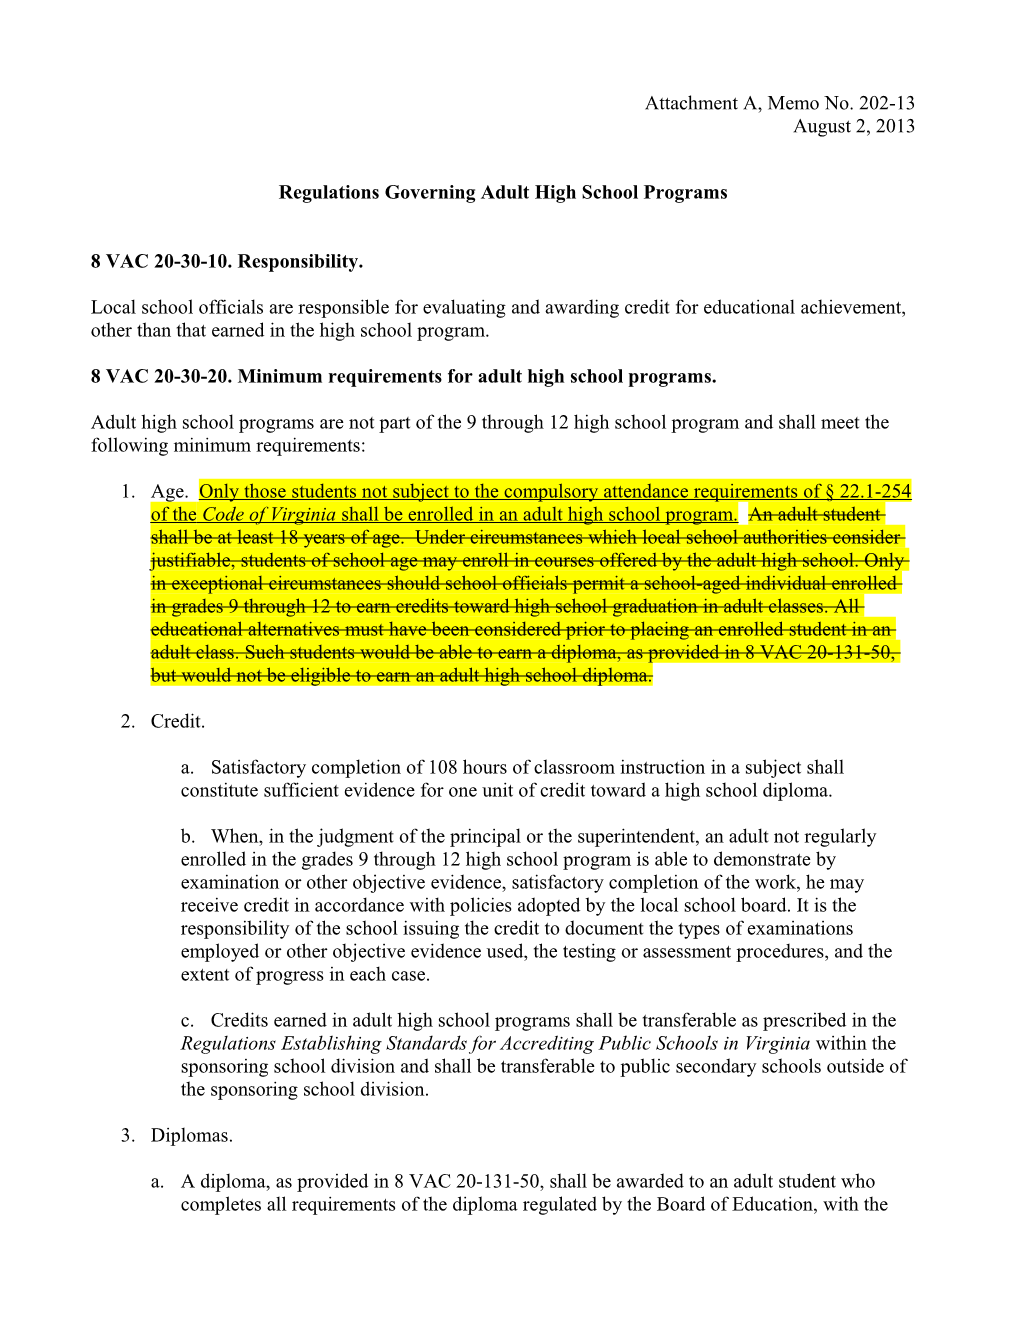 Regulations Governing Adult High School Programs